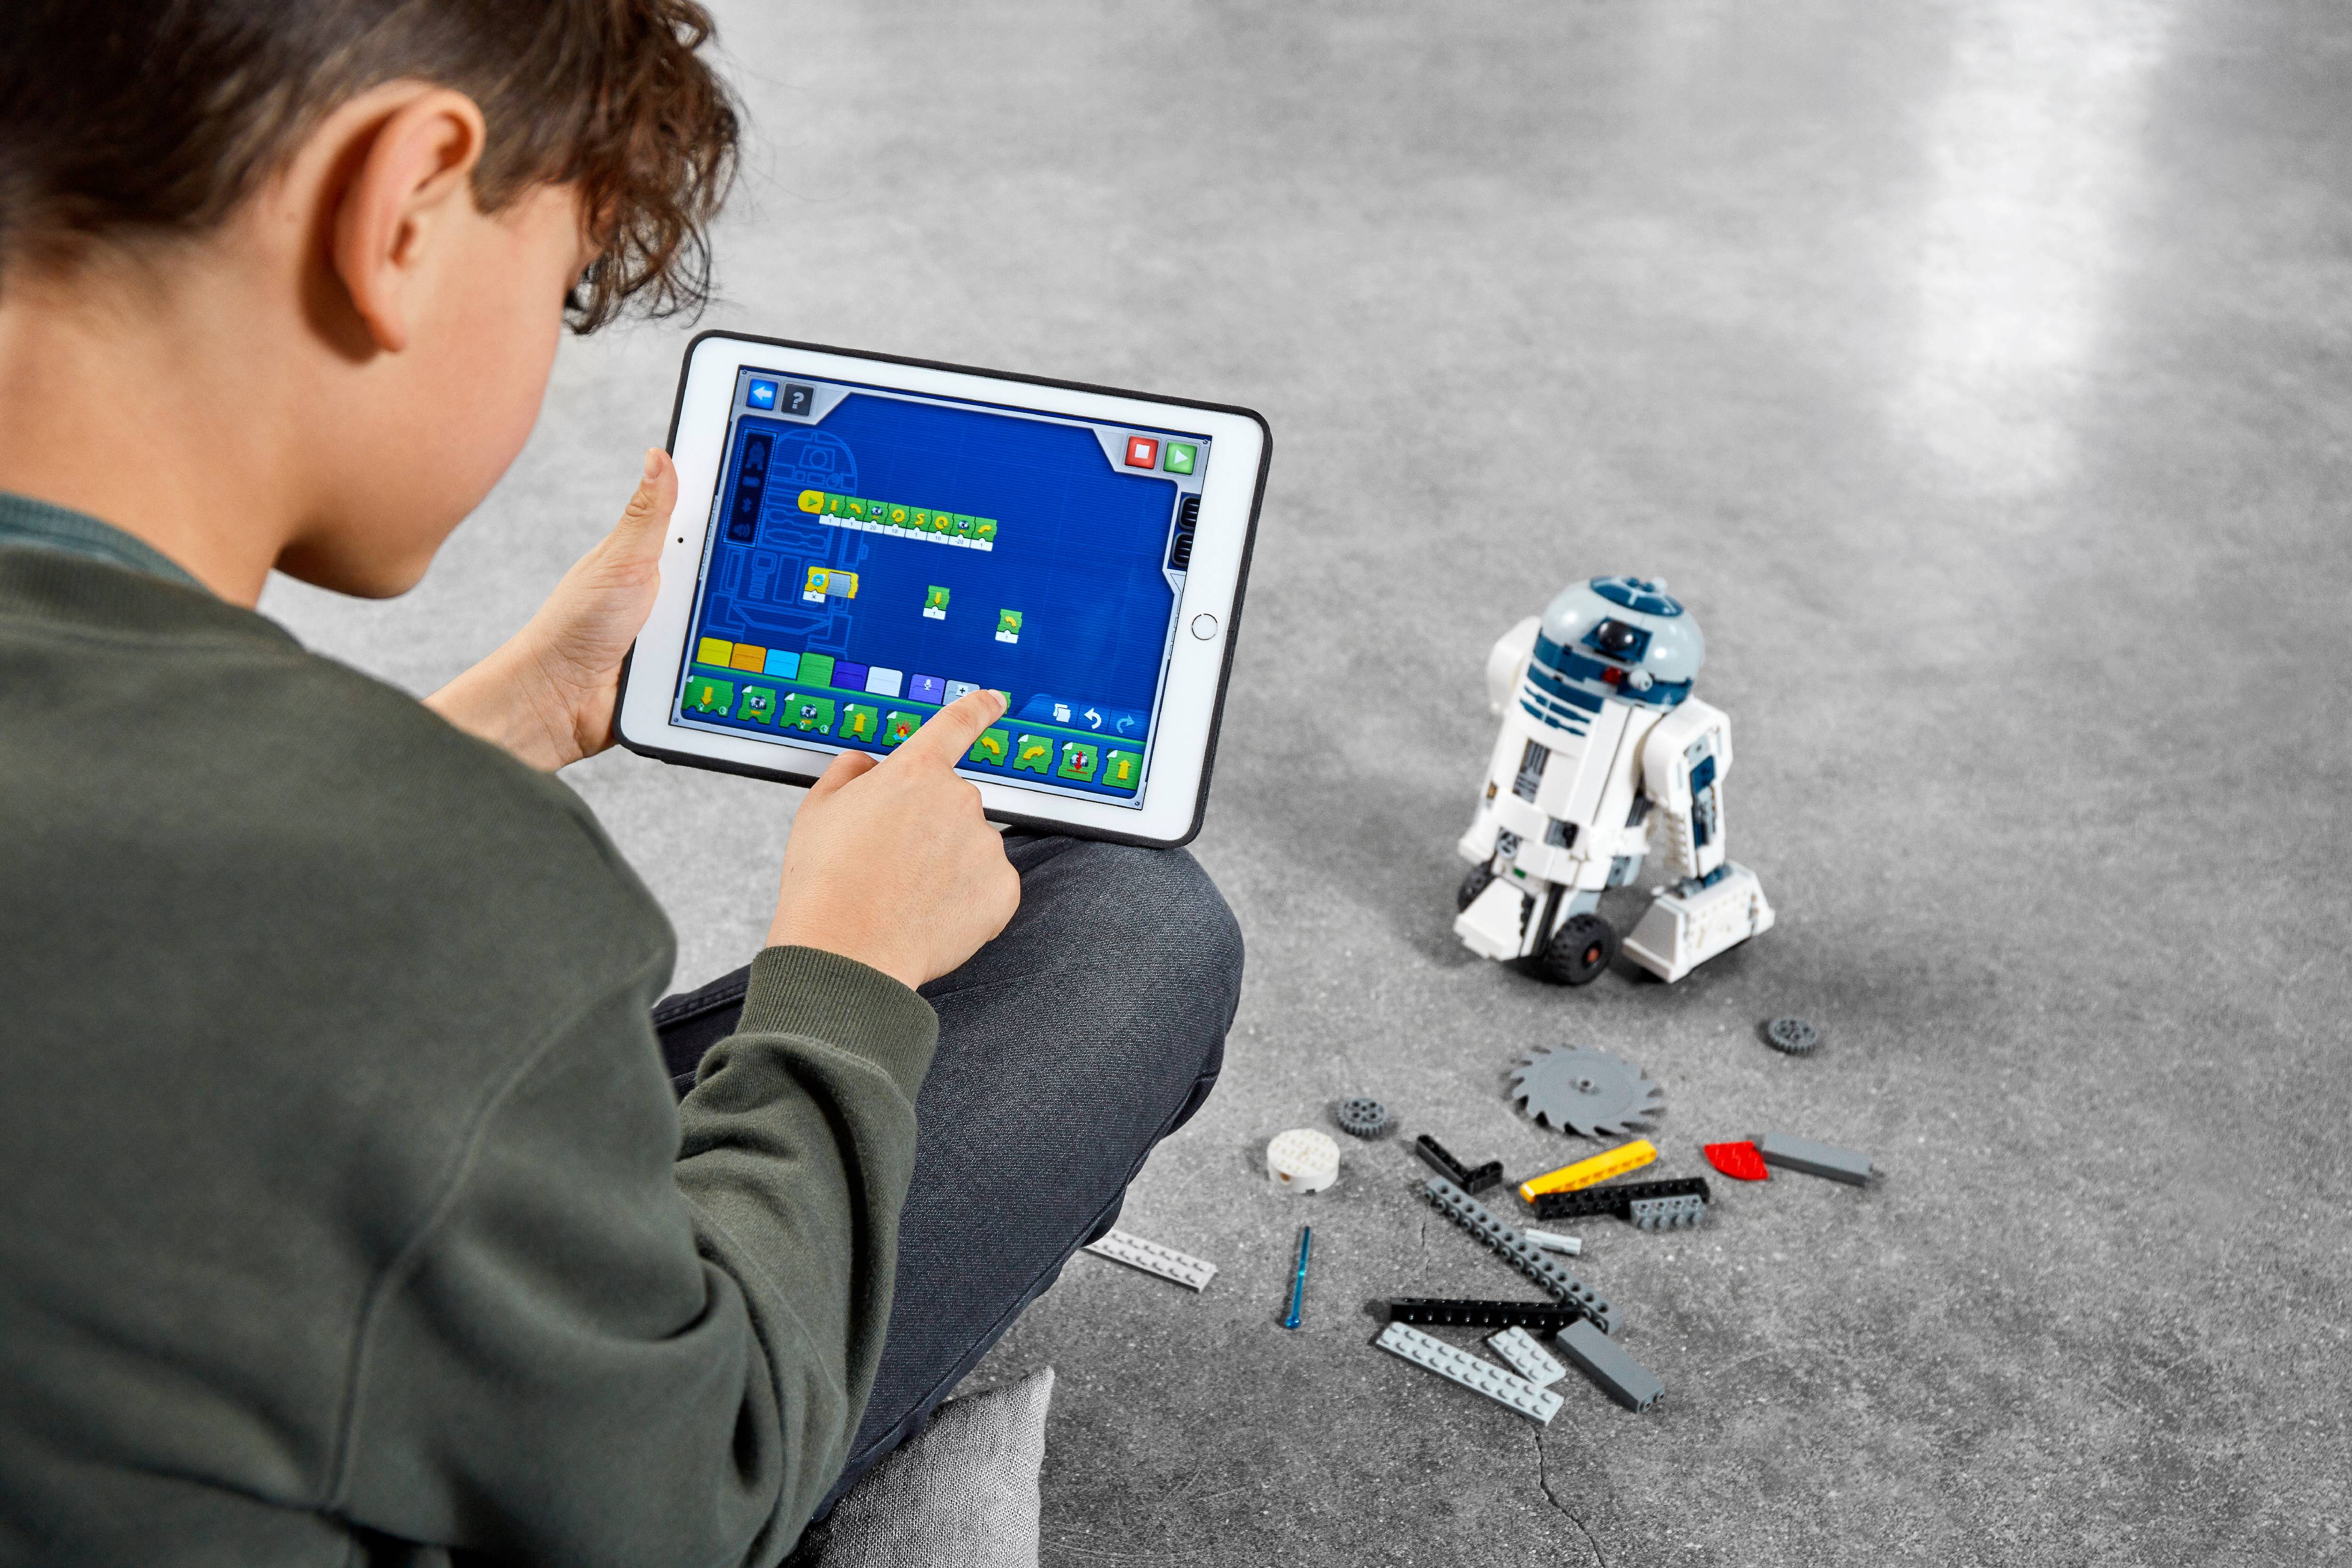 LEGO 75253 Star Wars Boost Droid Commander STEM Coding Educational Building Set for Kids - image 3 of 7